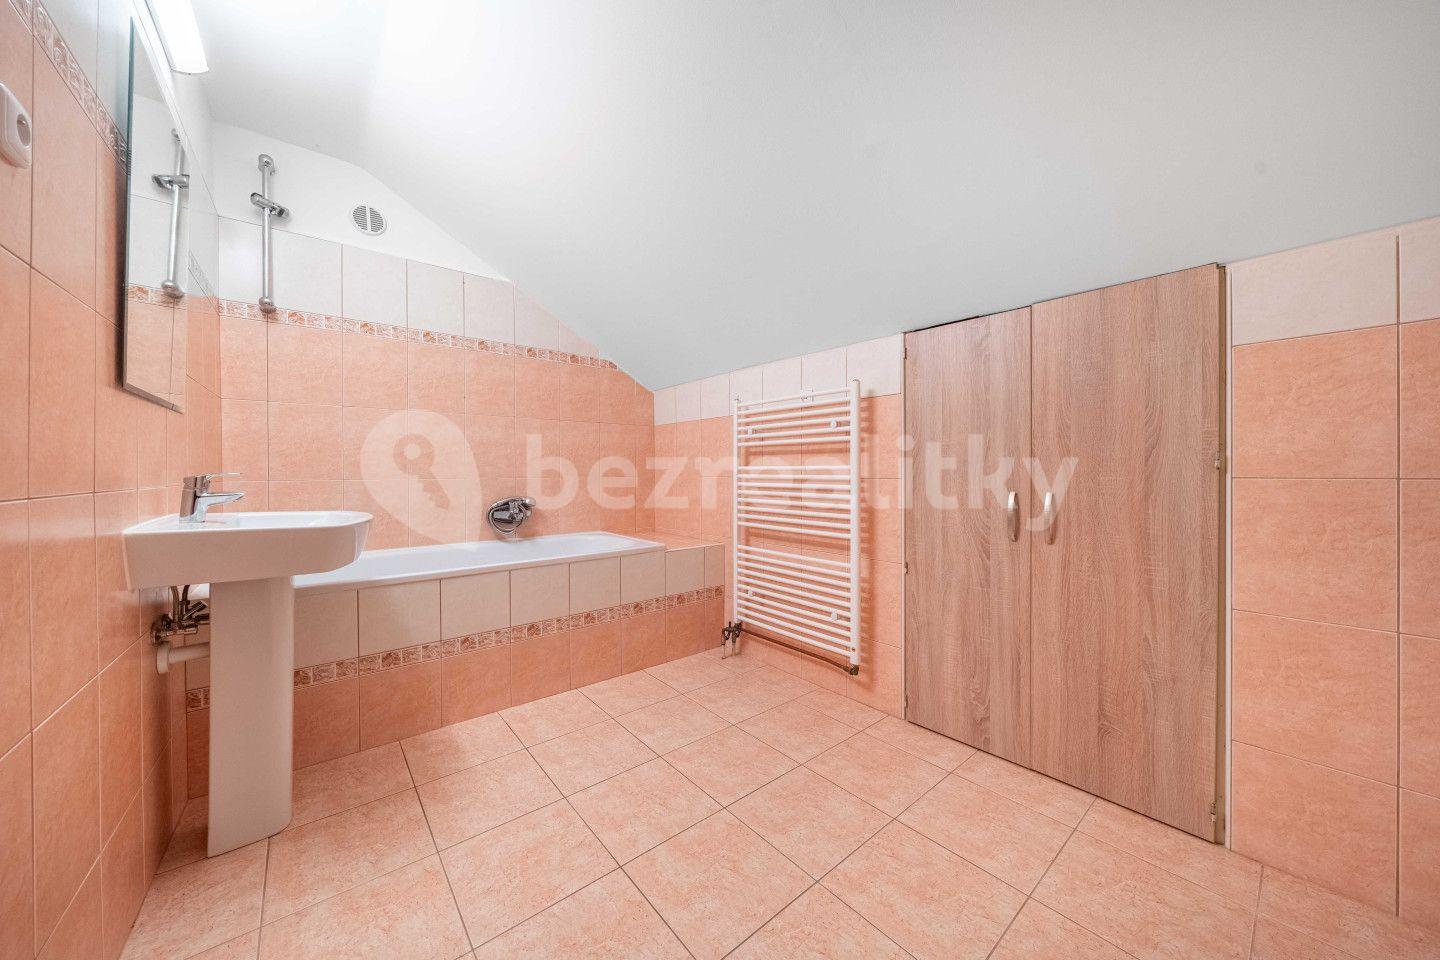 Prodej bytu 2+1 69 m², Rejchova, Chudenice, Plzeňský kraj